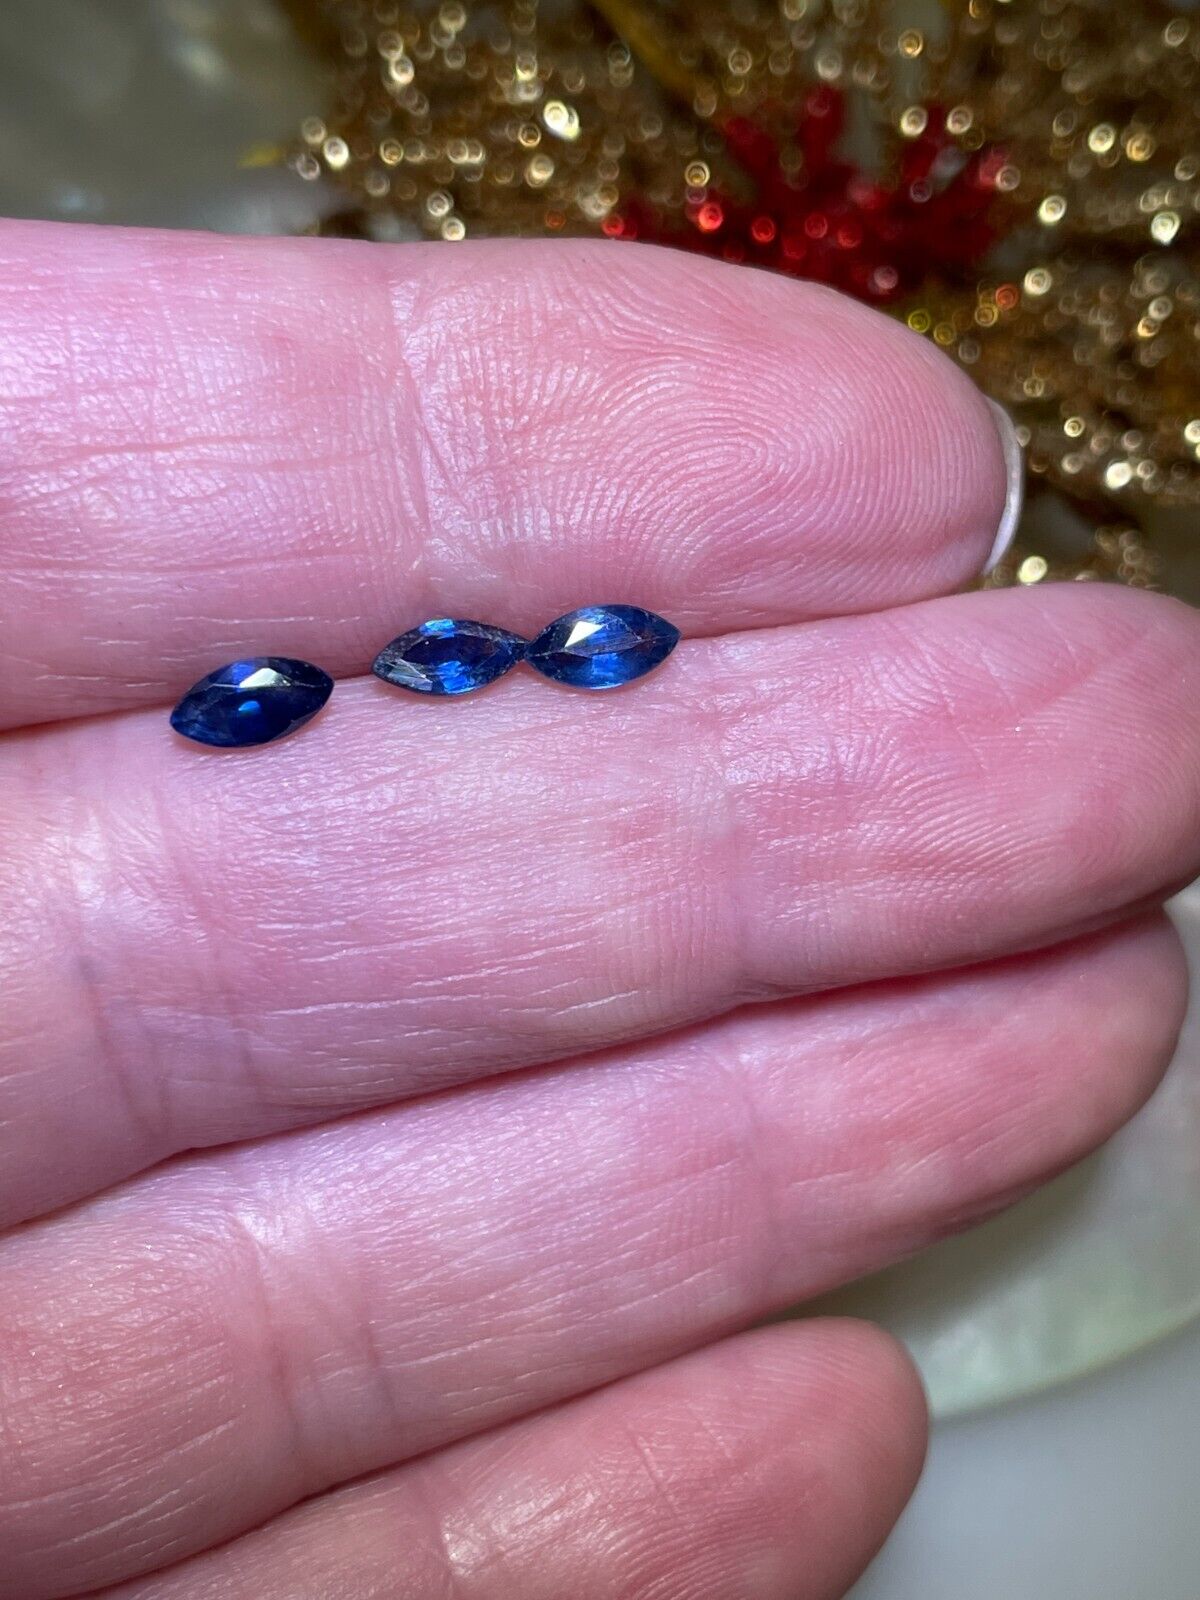 Loose A+ Grade Natural Blue Sapphire Gemstones Marquise Cut 1.09ctw Без бренда - фотография #5